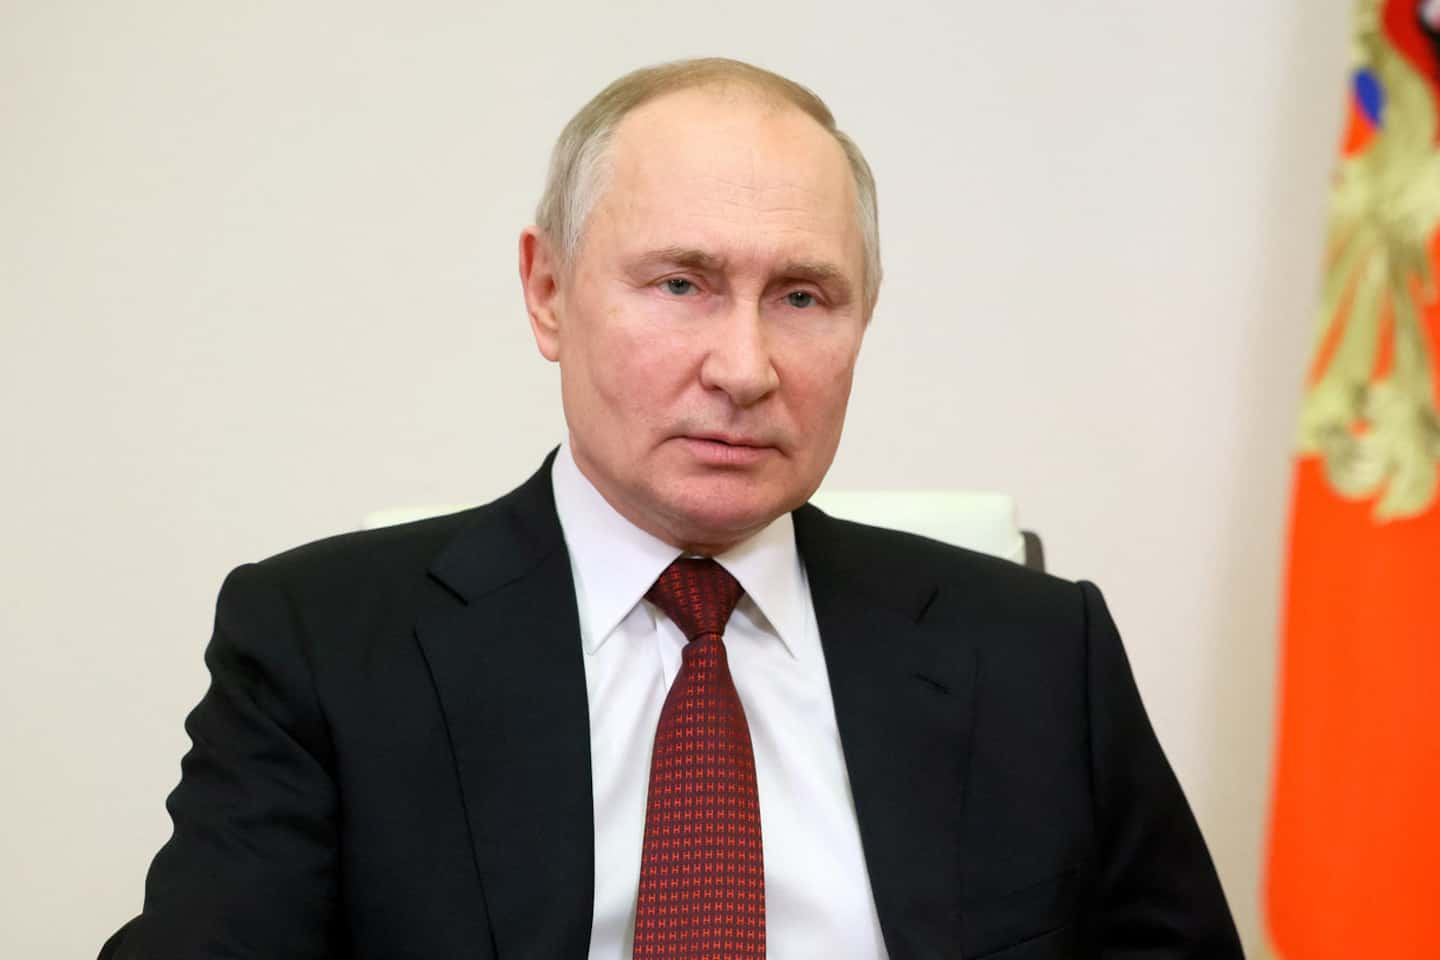 Ten months of war in Ukraine: the West wants to “divide” Russia, according to Putin